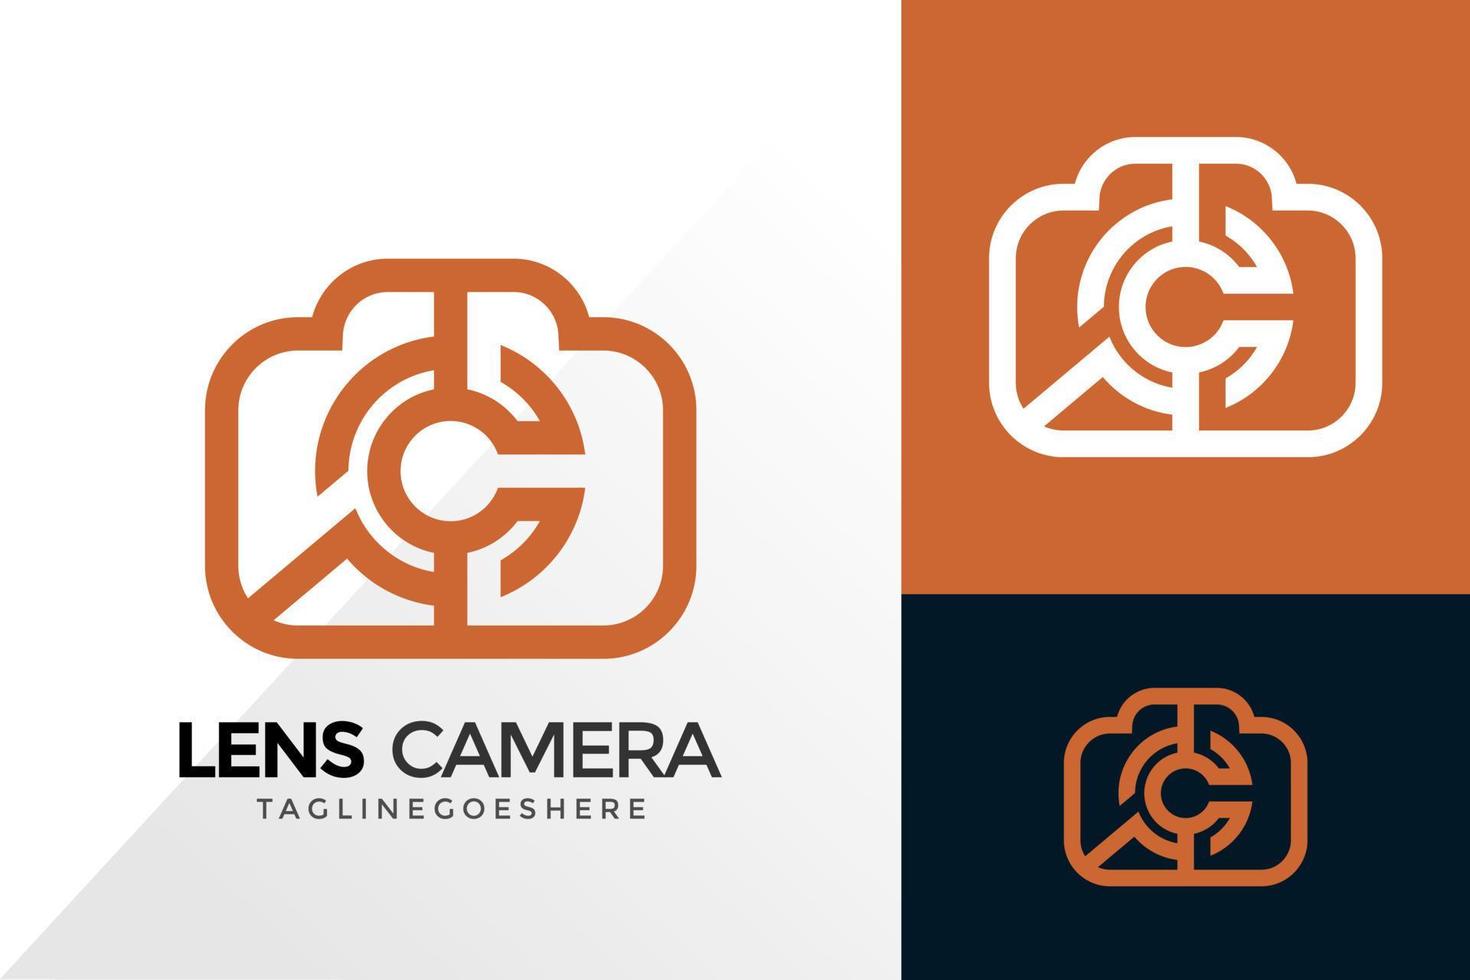 Letter C Lens Camera Logo Design, Brand Identity Logos Designs Vector Illustration Template